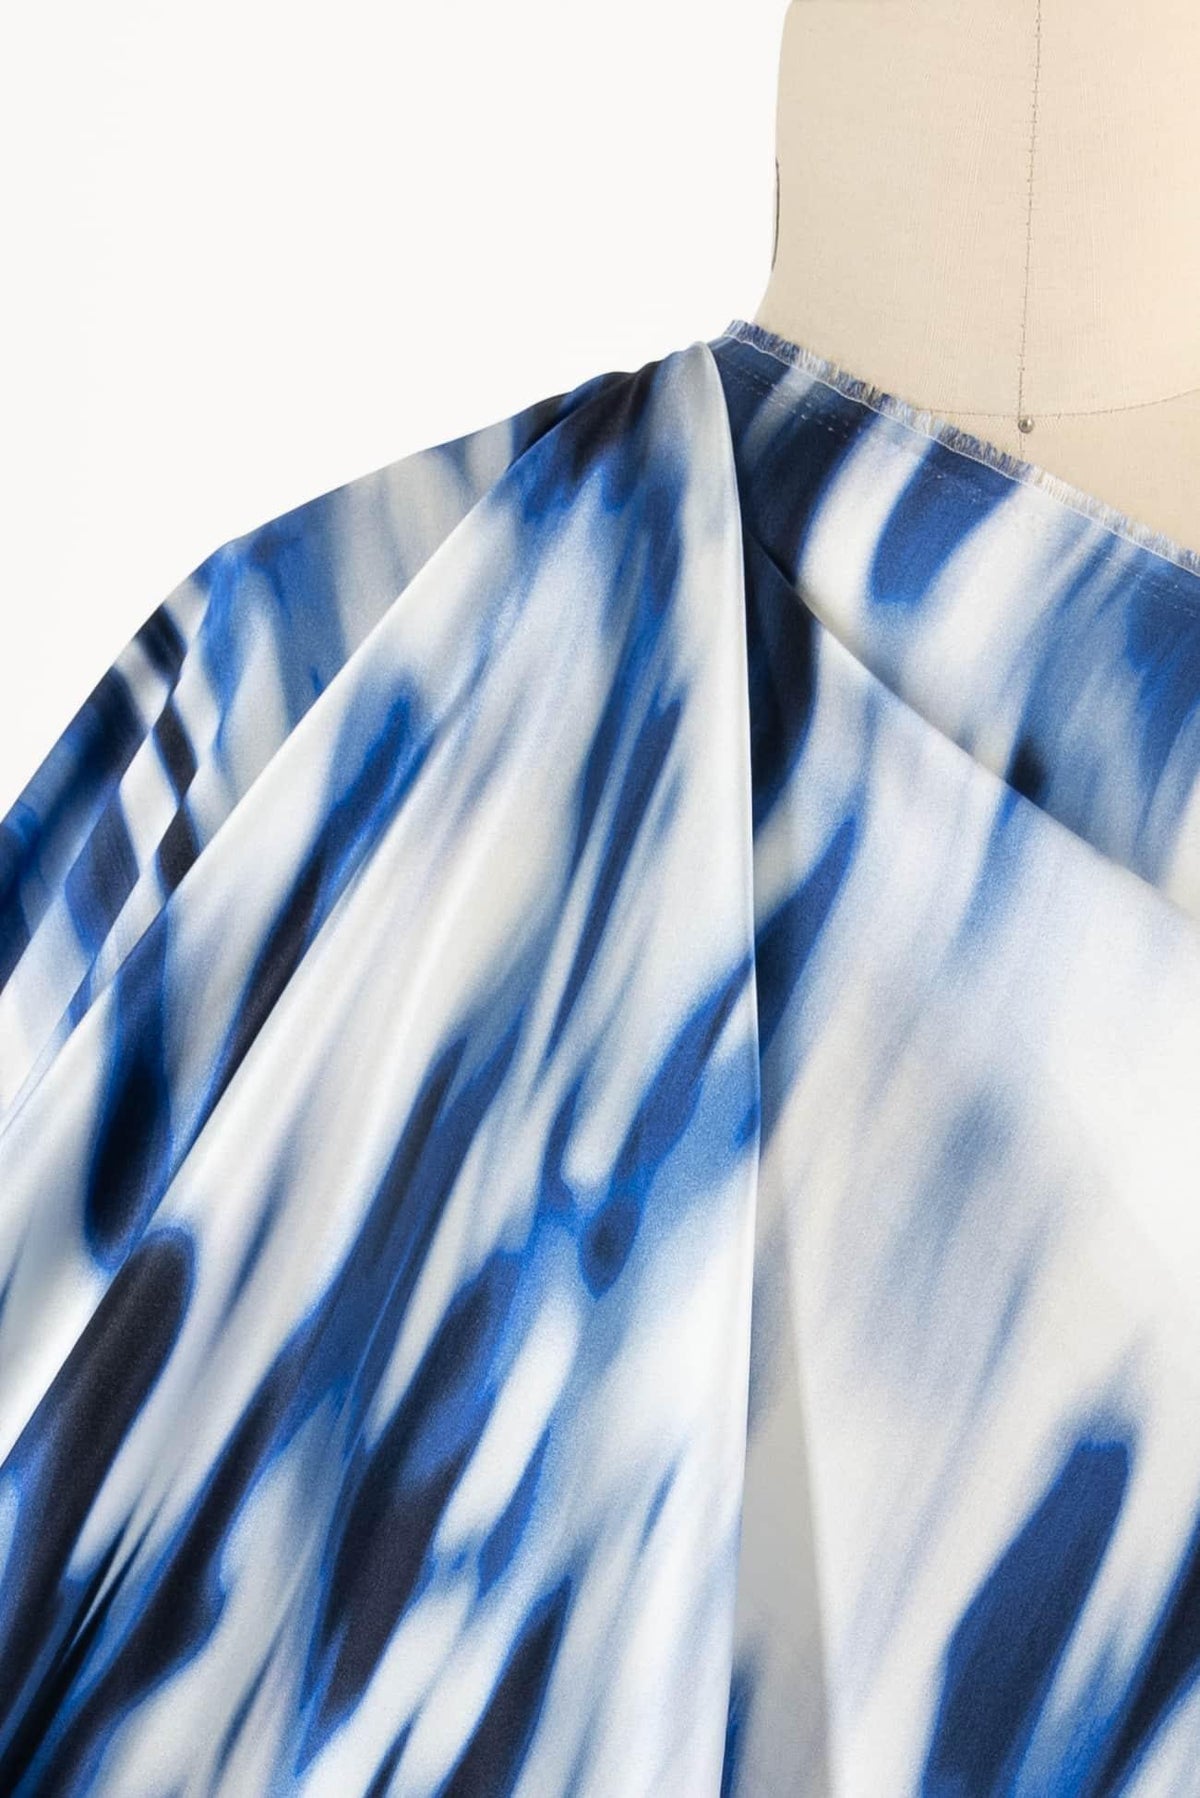 Ripple Italian Silk Crepe De Chine Woven - Marcy Tilton Fabrics